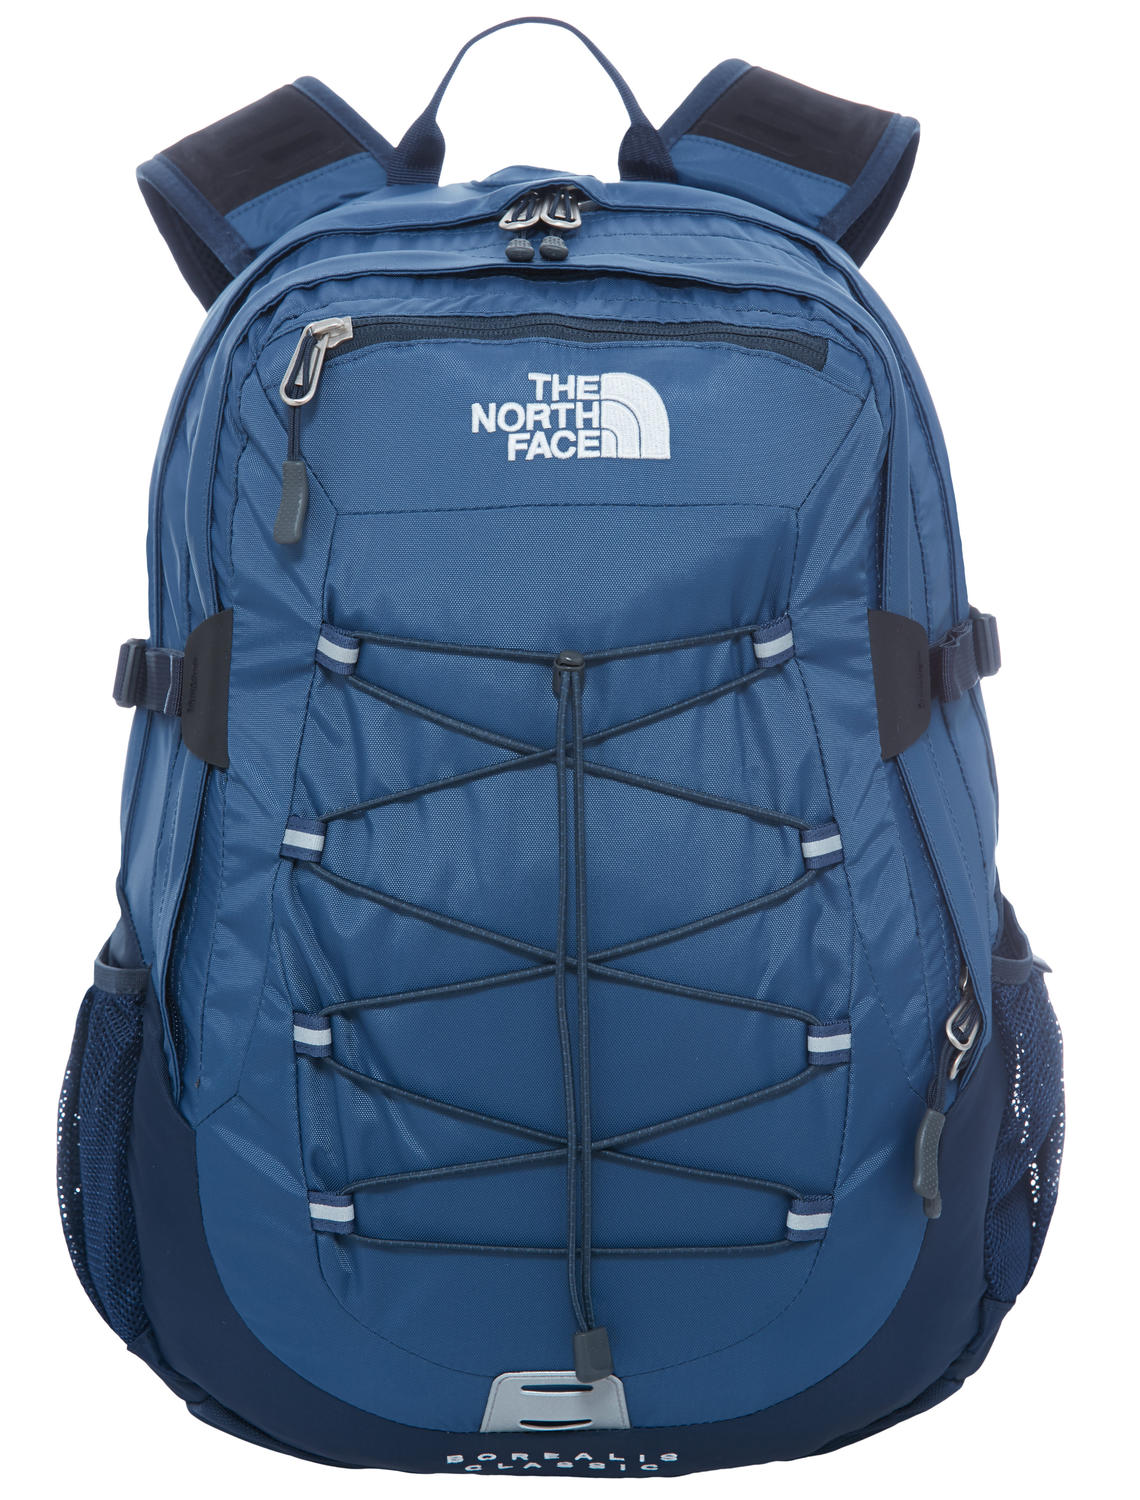 The North Face Borealis Backpack 15” Laptop Bag Shadyblue / Urban Navy